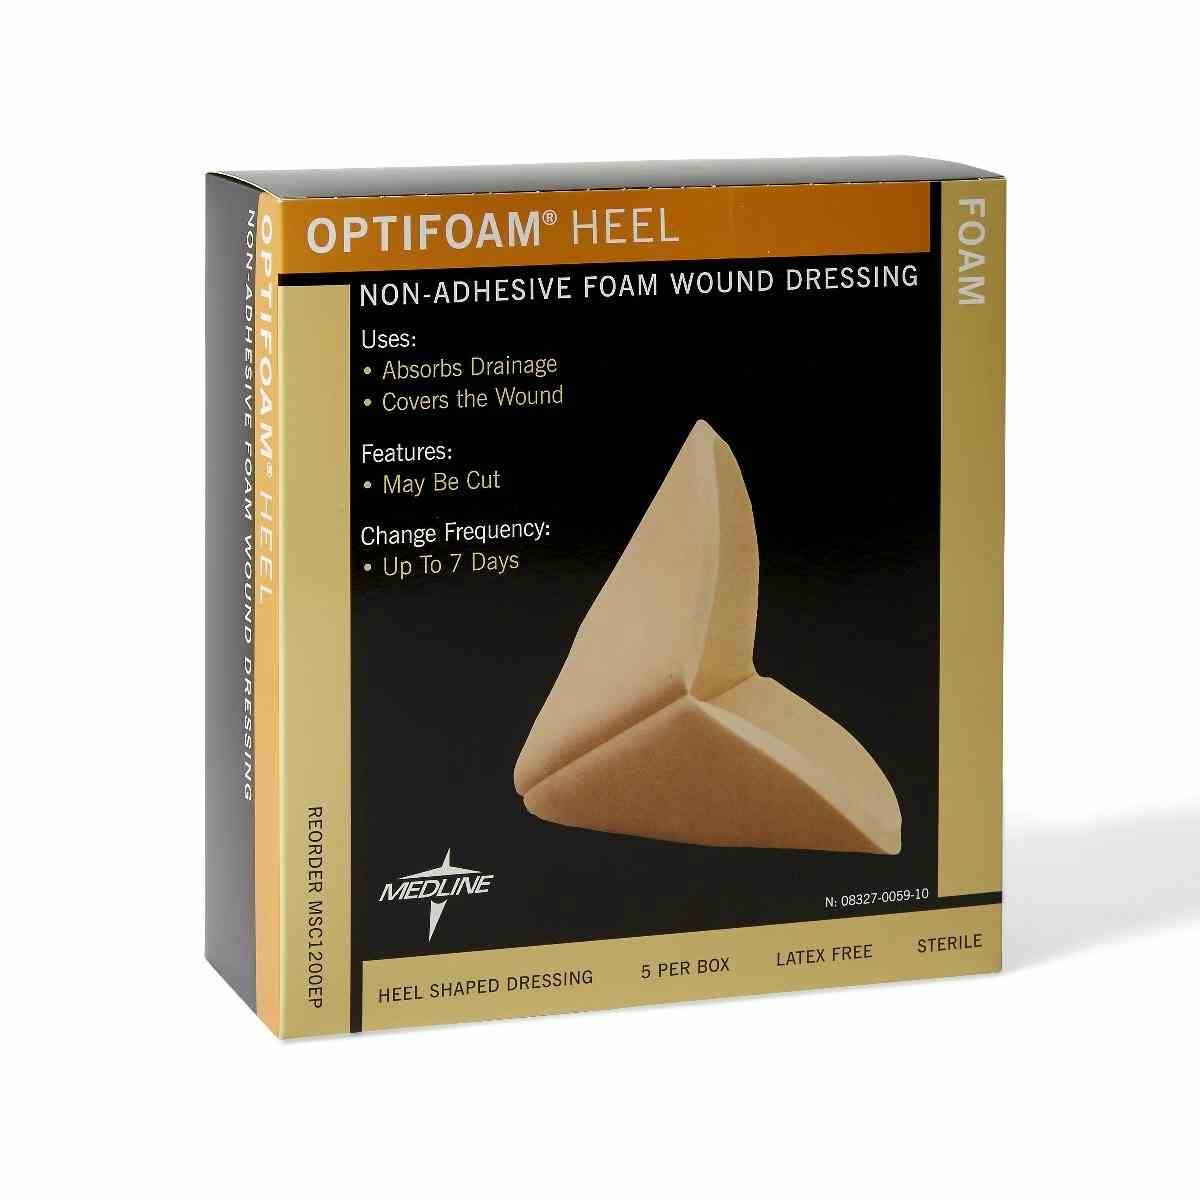 Medline Optifoam Heel Non-Adhesive Foam Wound Dressing, MSC1200EPZ, Box of 5